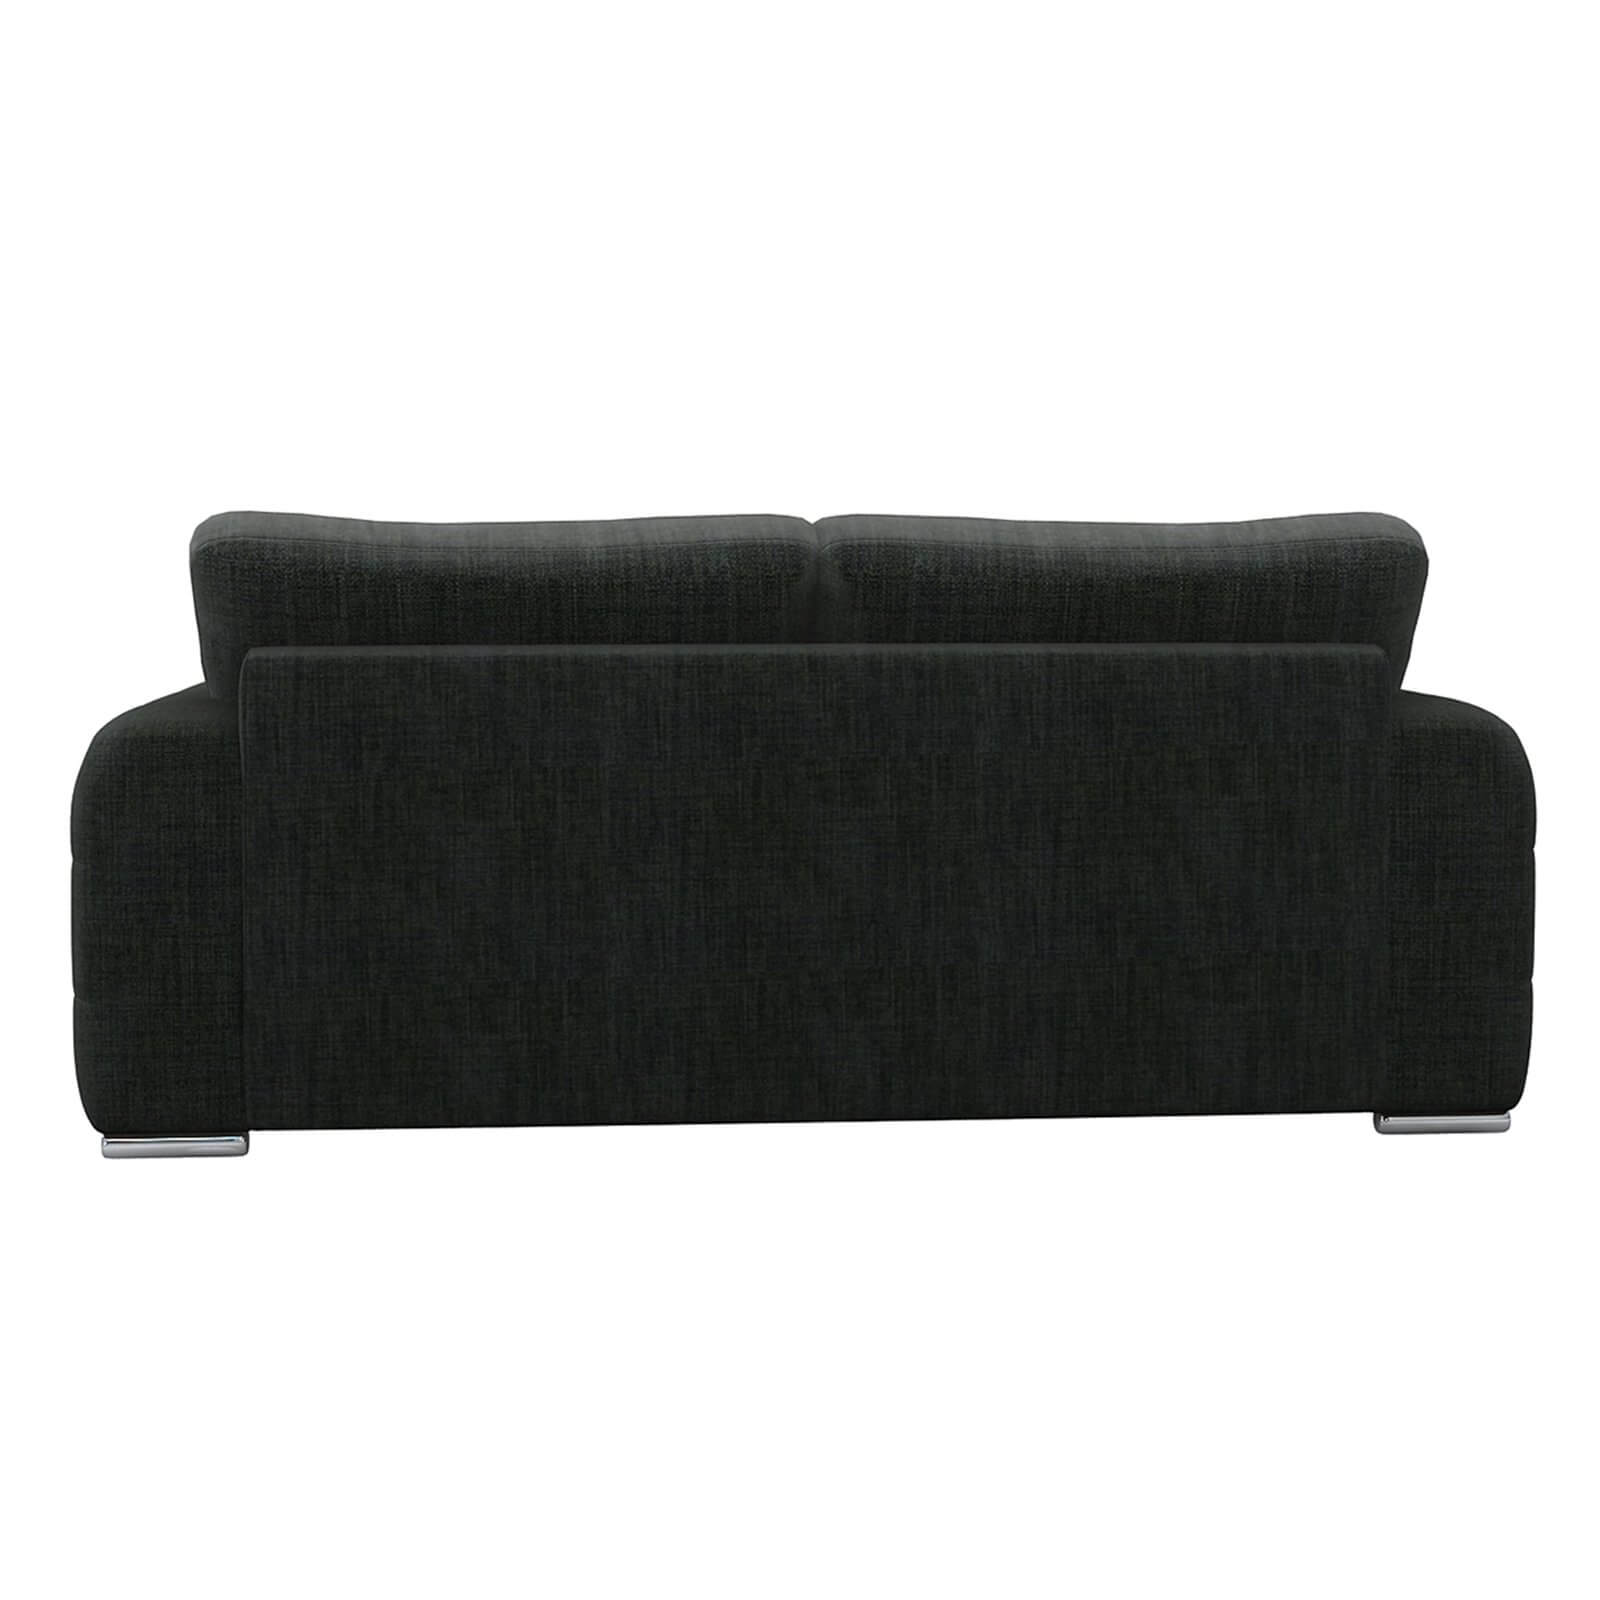 Amethyst 3 Seater Sofa - Charcoal